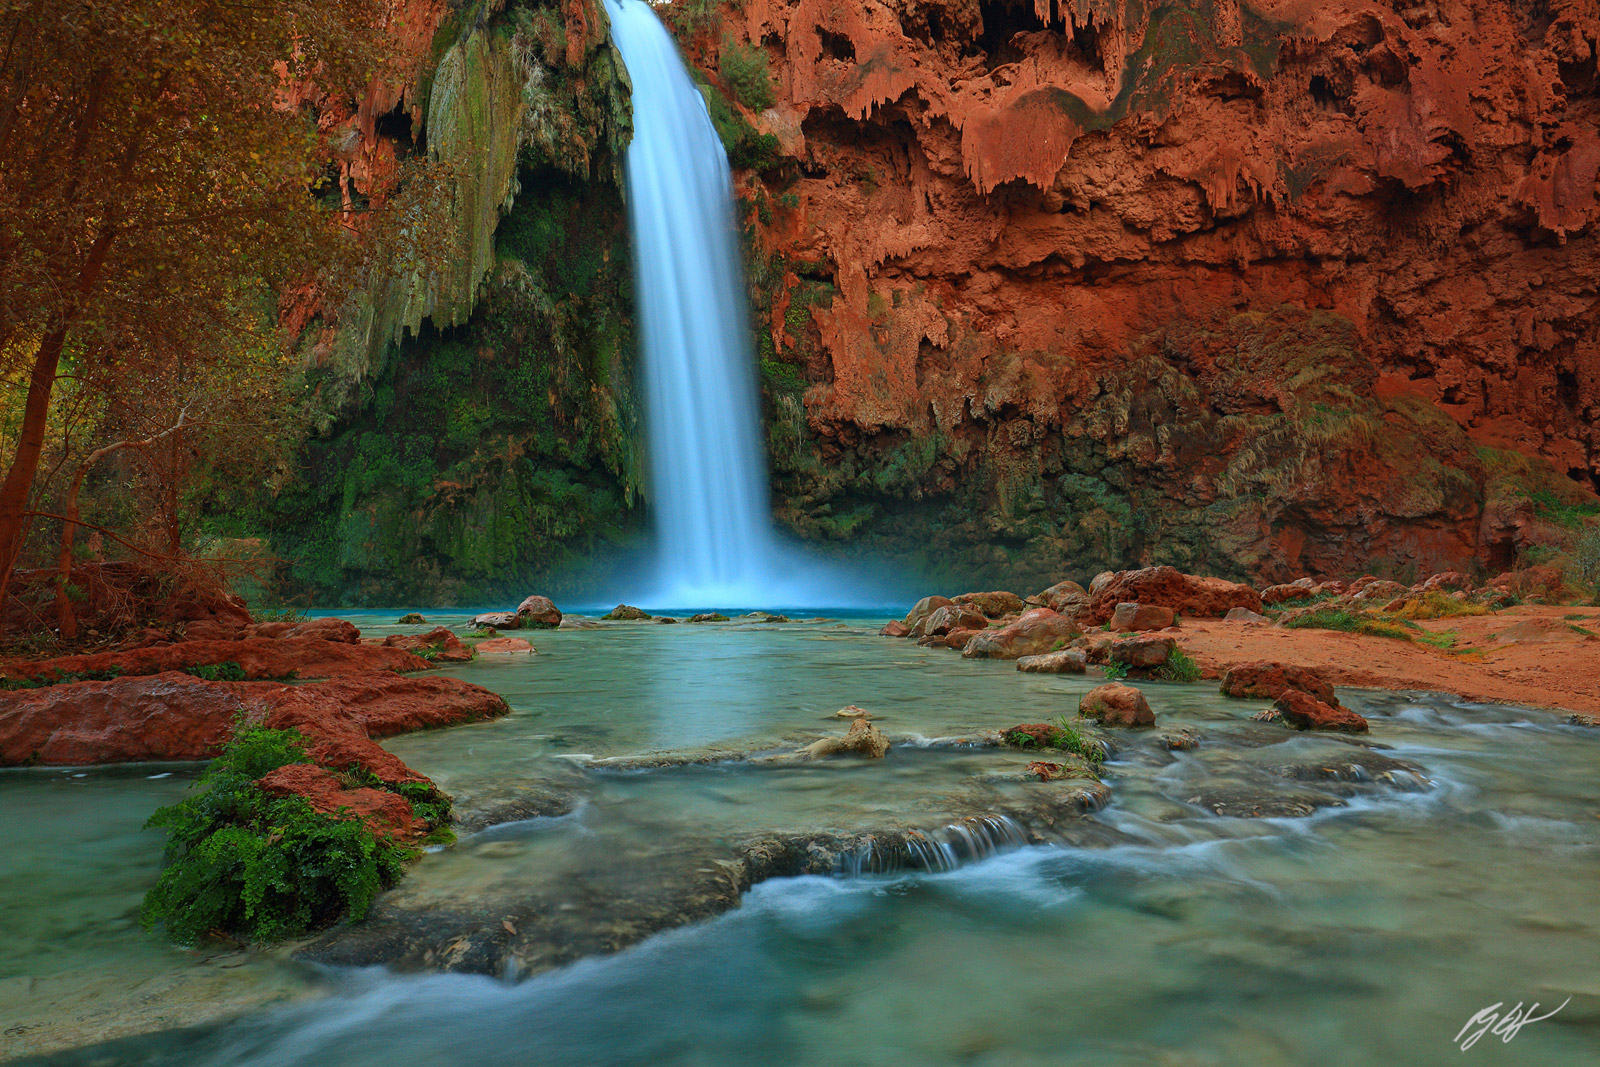 Havasu Falls in Havasu Canyon in the Havasupai Indian Reservation in Arizona